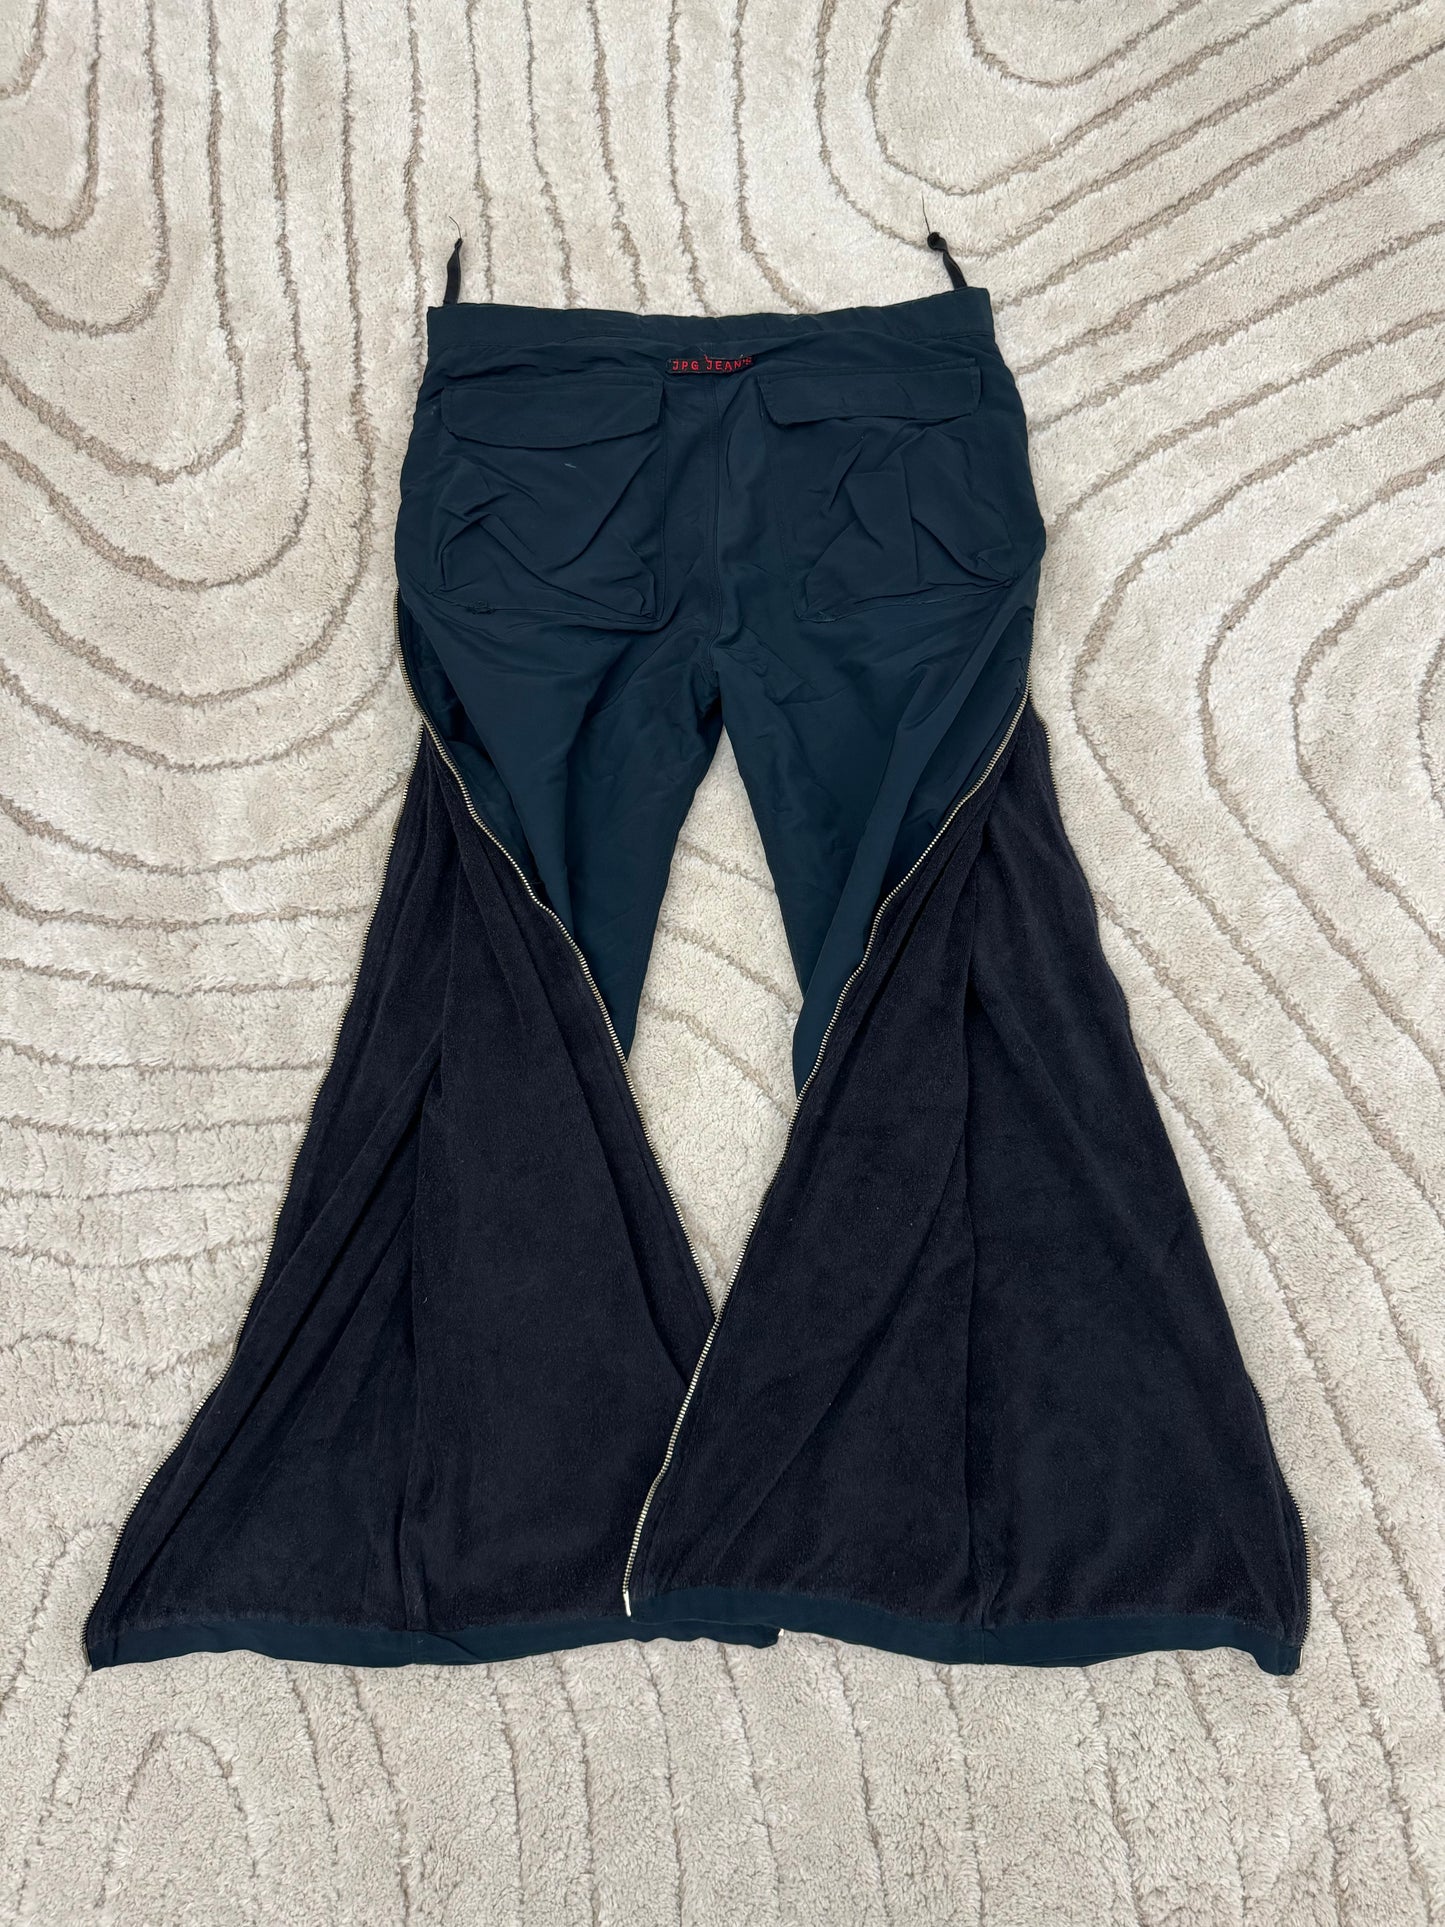 2000s Jean Paul Gaultier Full Zip Nylon Pants (M)